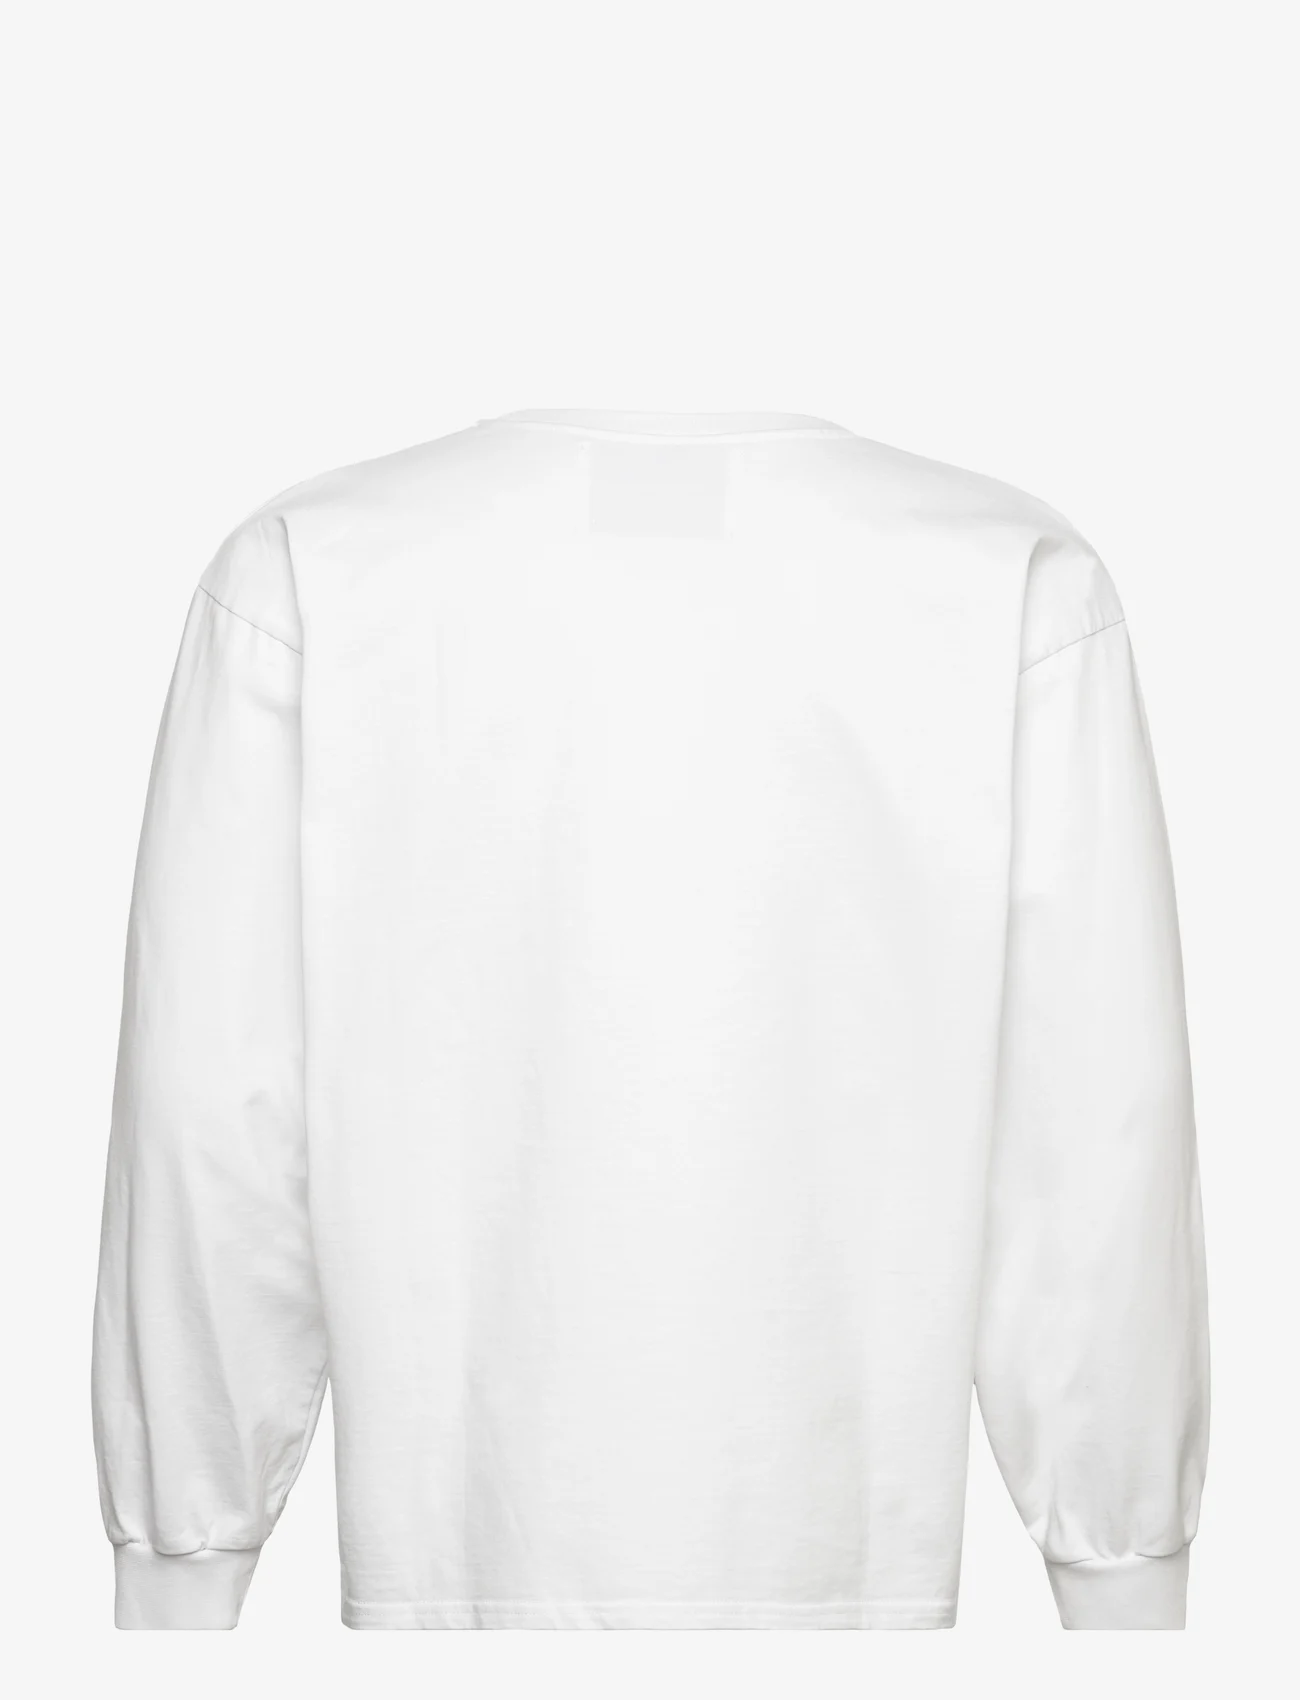 Garment Project - Heavy L/S Tee - White - långärmade t-shirts - white - 1